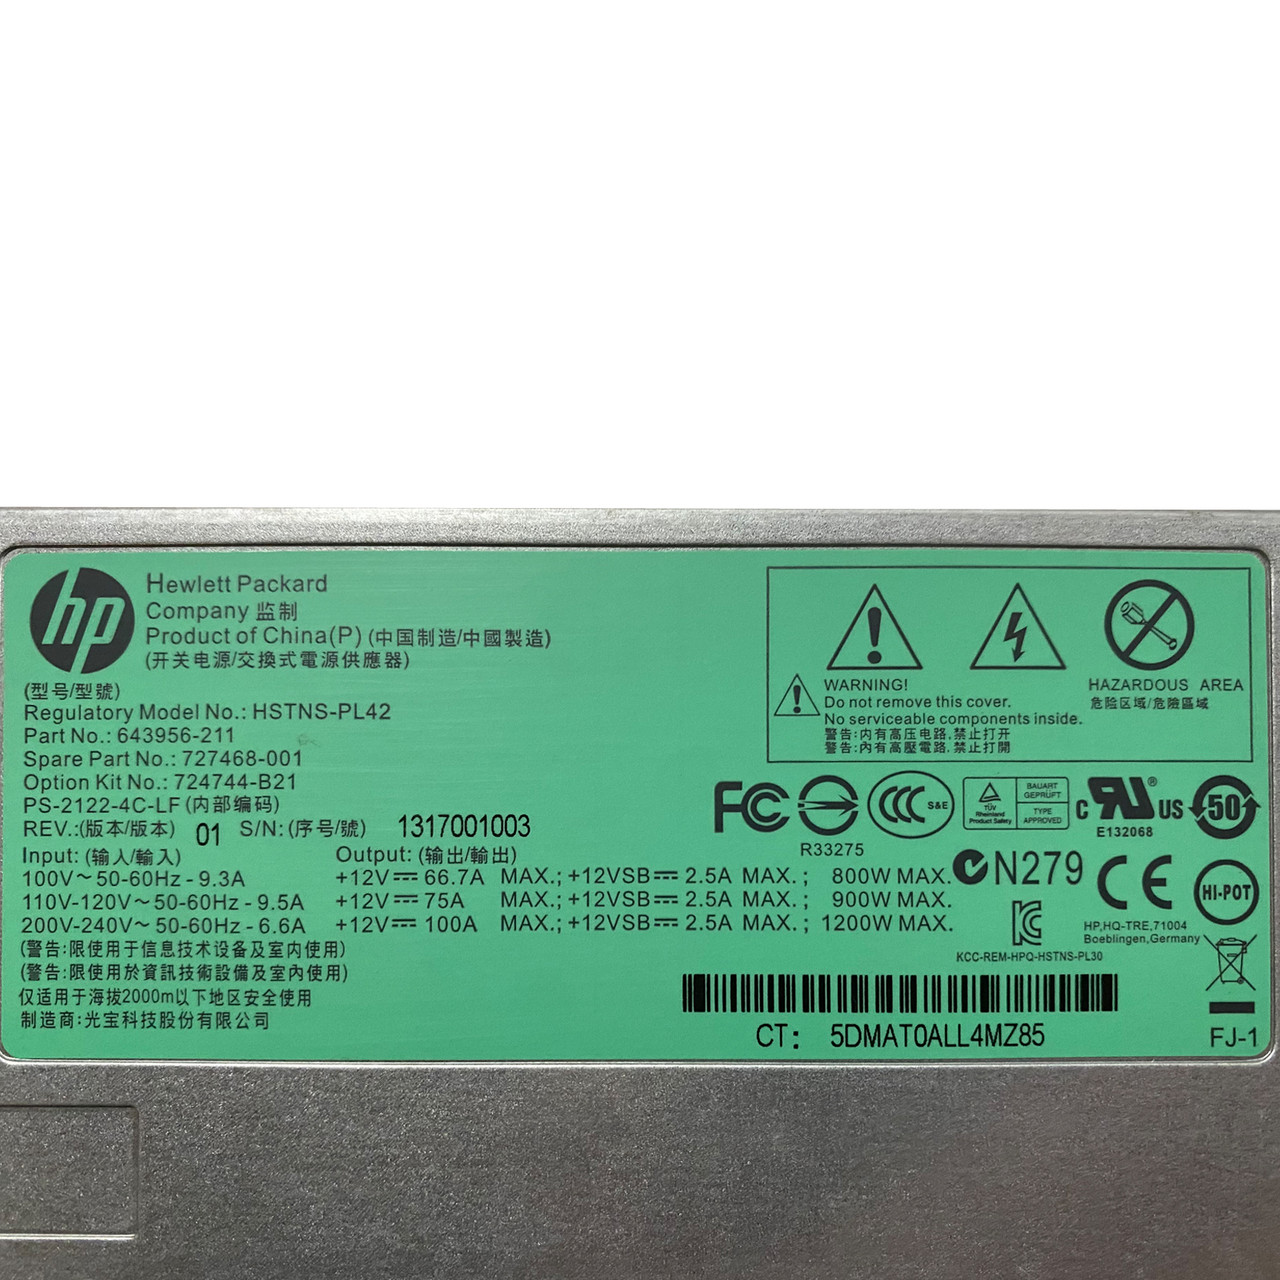 HP 727468-001 1200W Platinum Plus Power Supply HSTNS-PL42